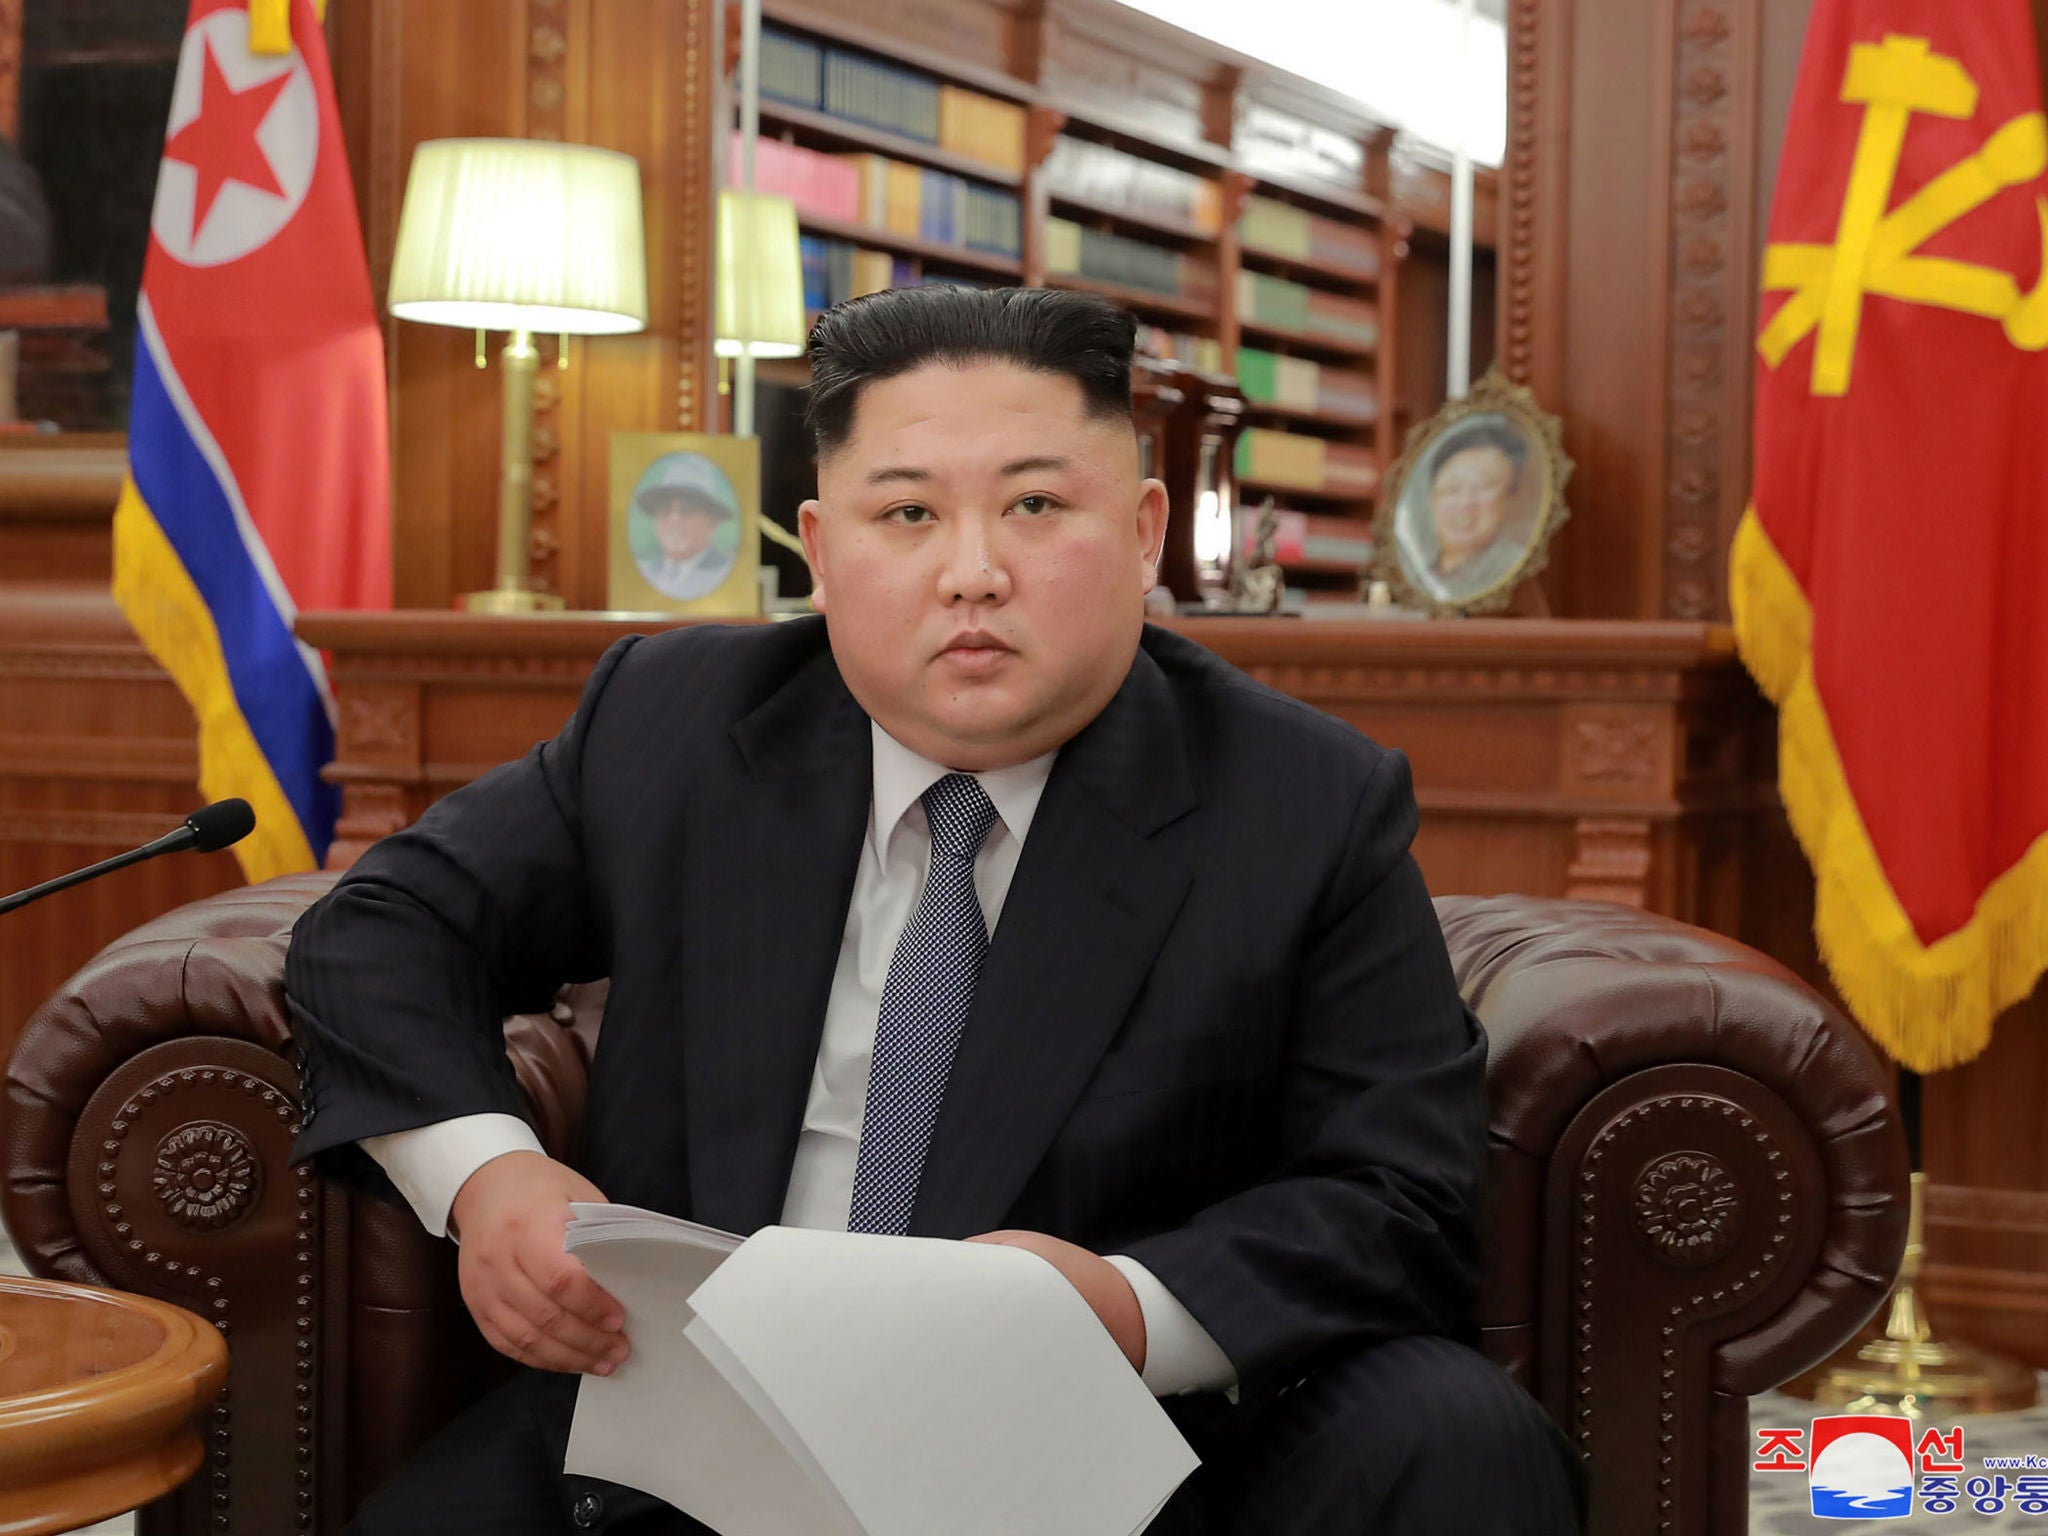 North Korean leader Kim Jong Un delivers a New Year's speech